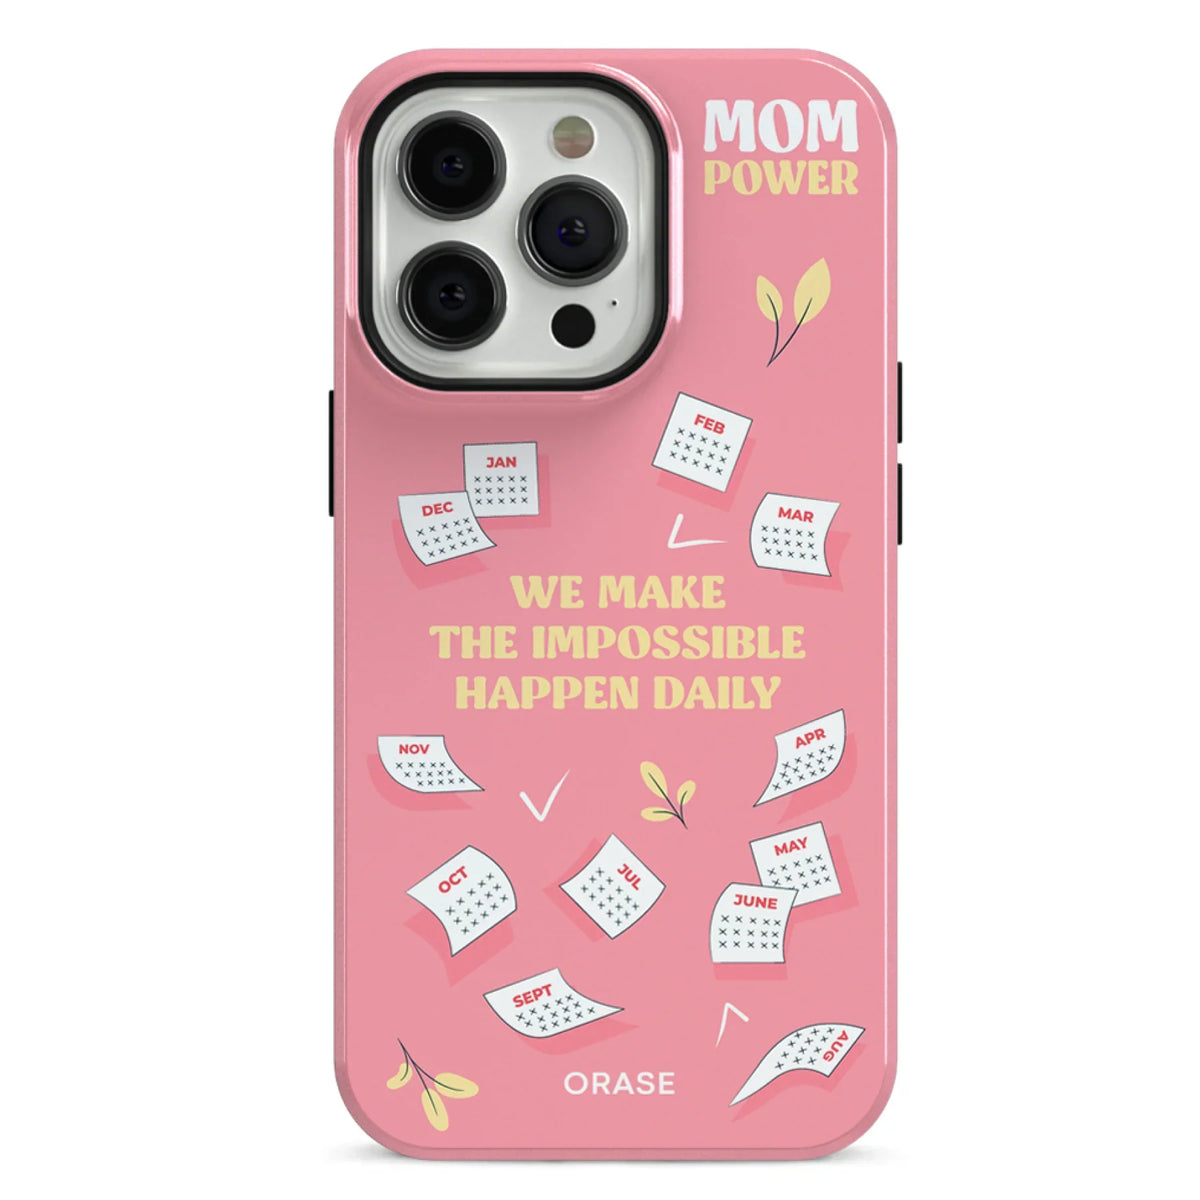 Mom Power iPhone Case - iPhone 12 Mini